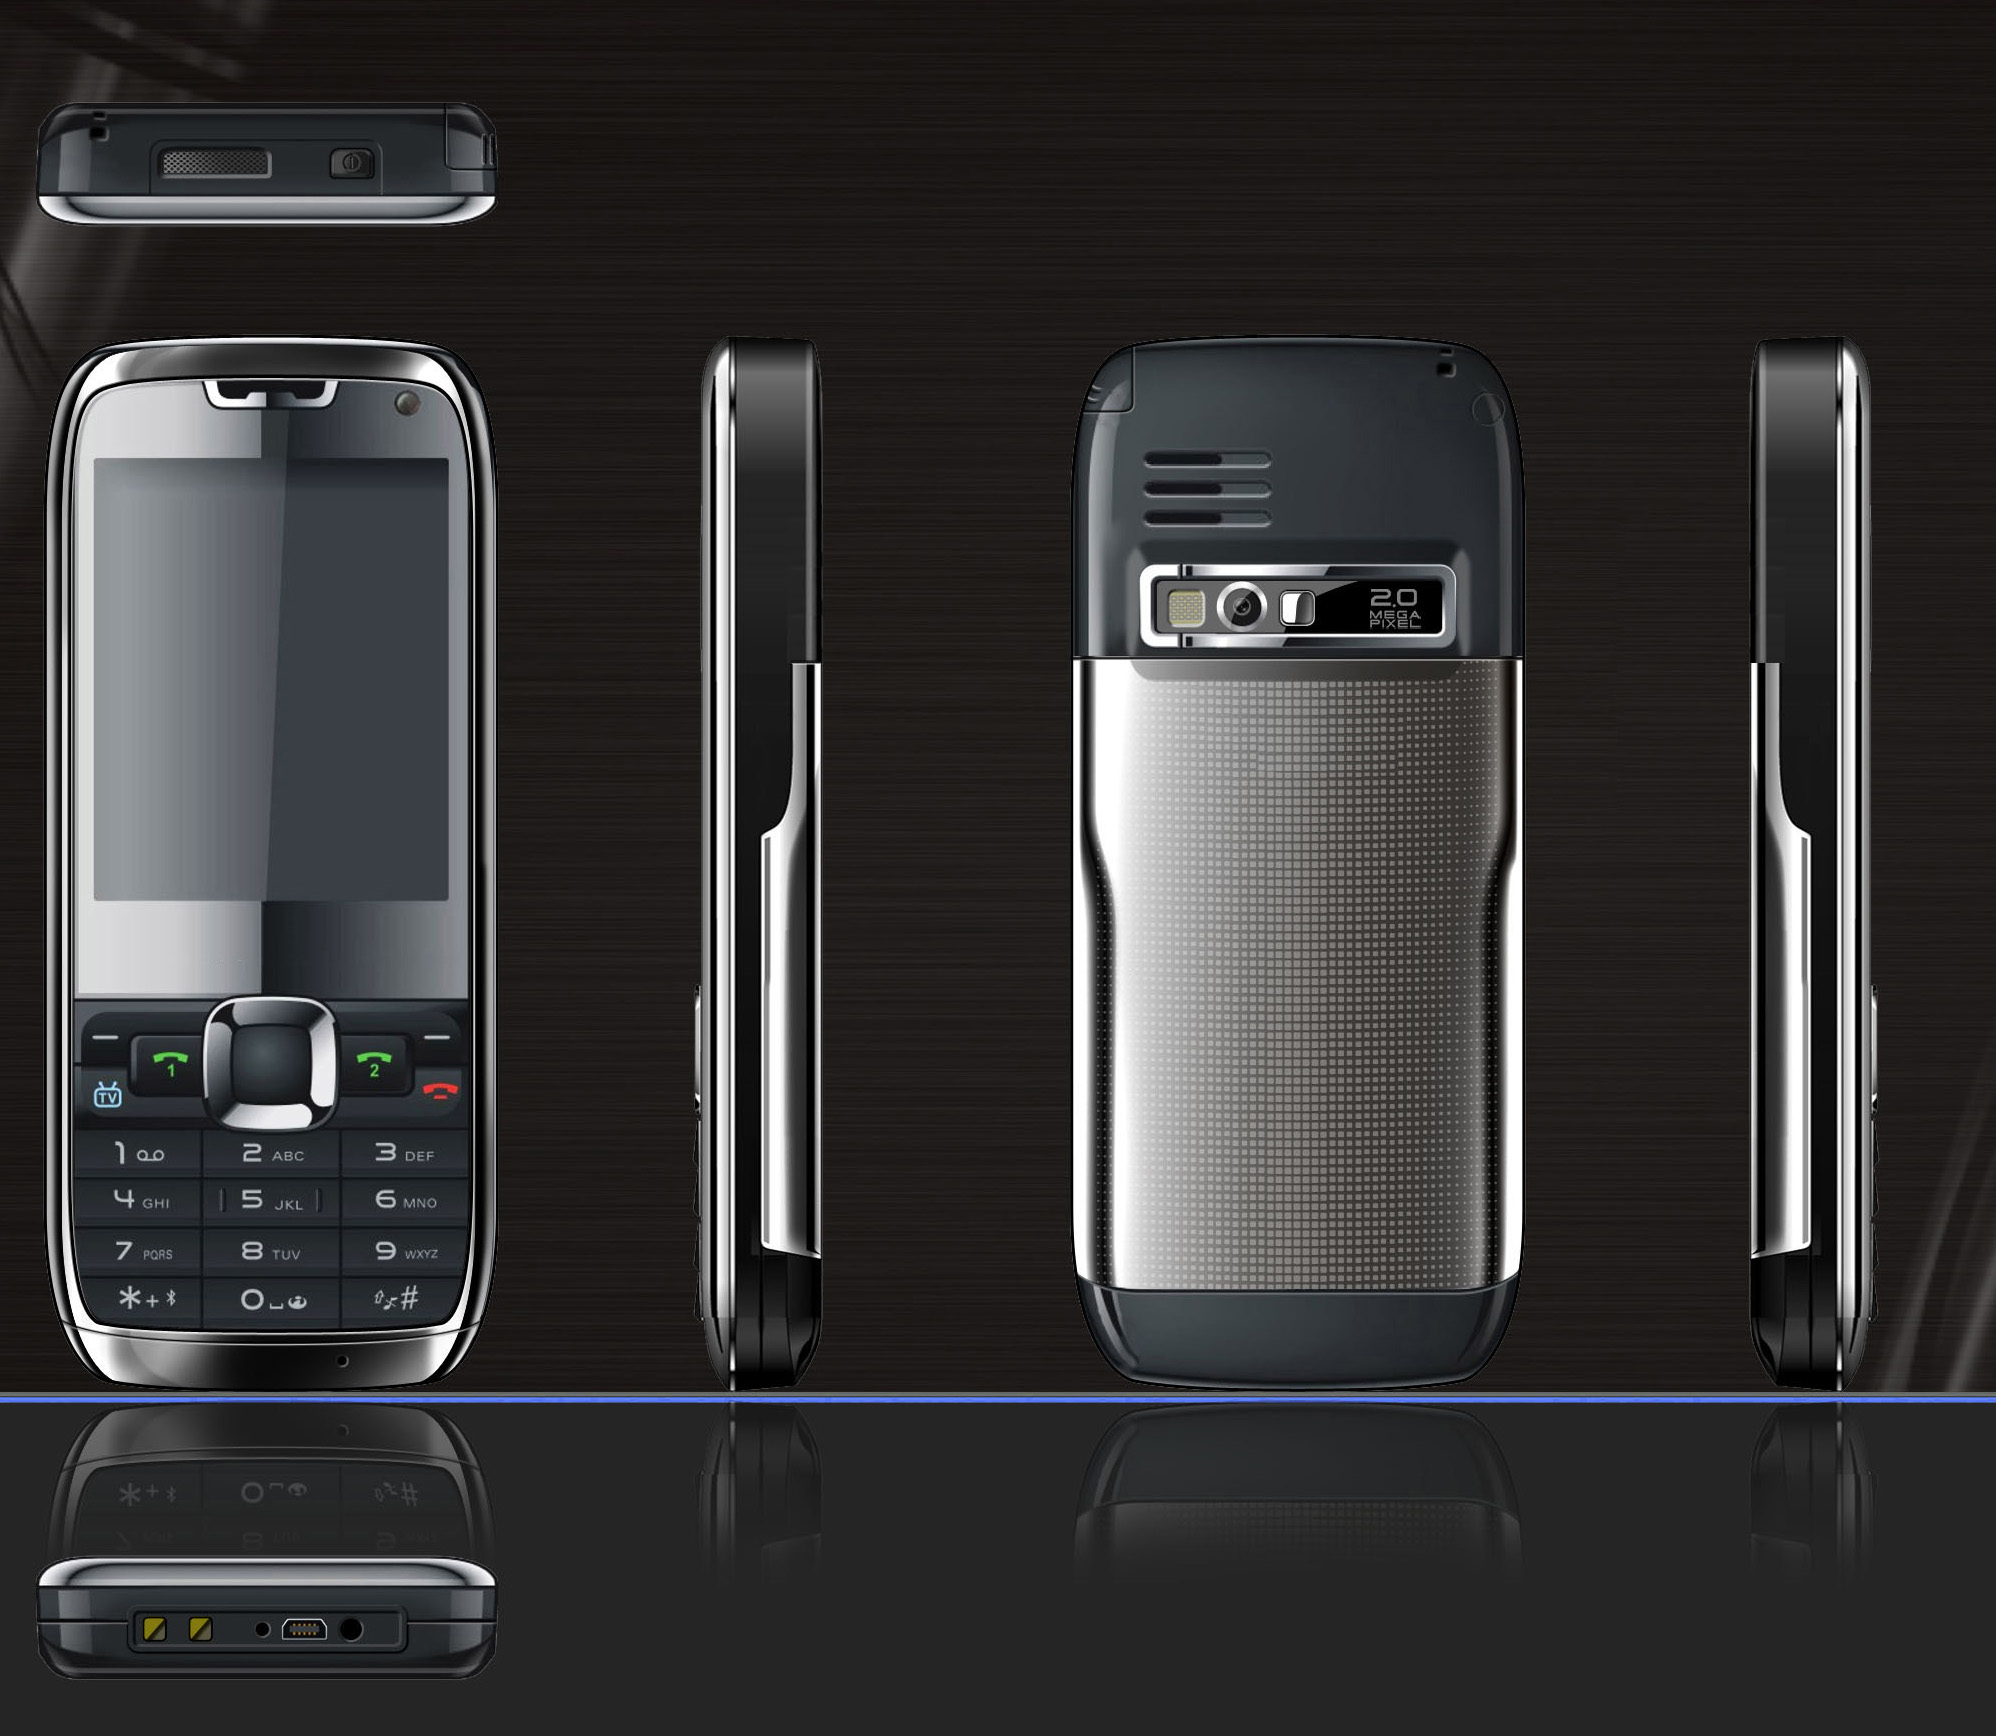 E71 Quadband Dual SIM GSM Analoge TV mobile phone,Dual Standby,Supports Java,MSN,Yahoo chatting tools,FM,MP3/4 Player,Shaking,